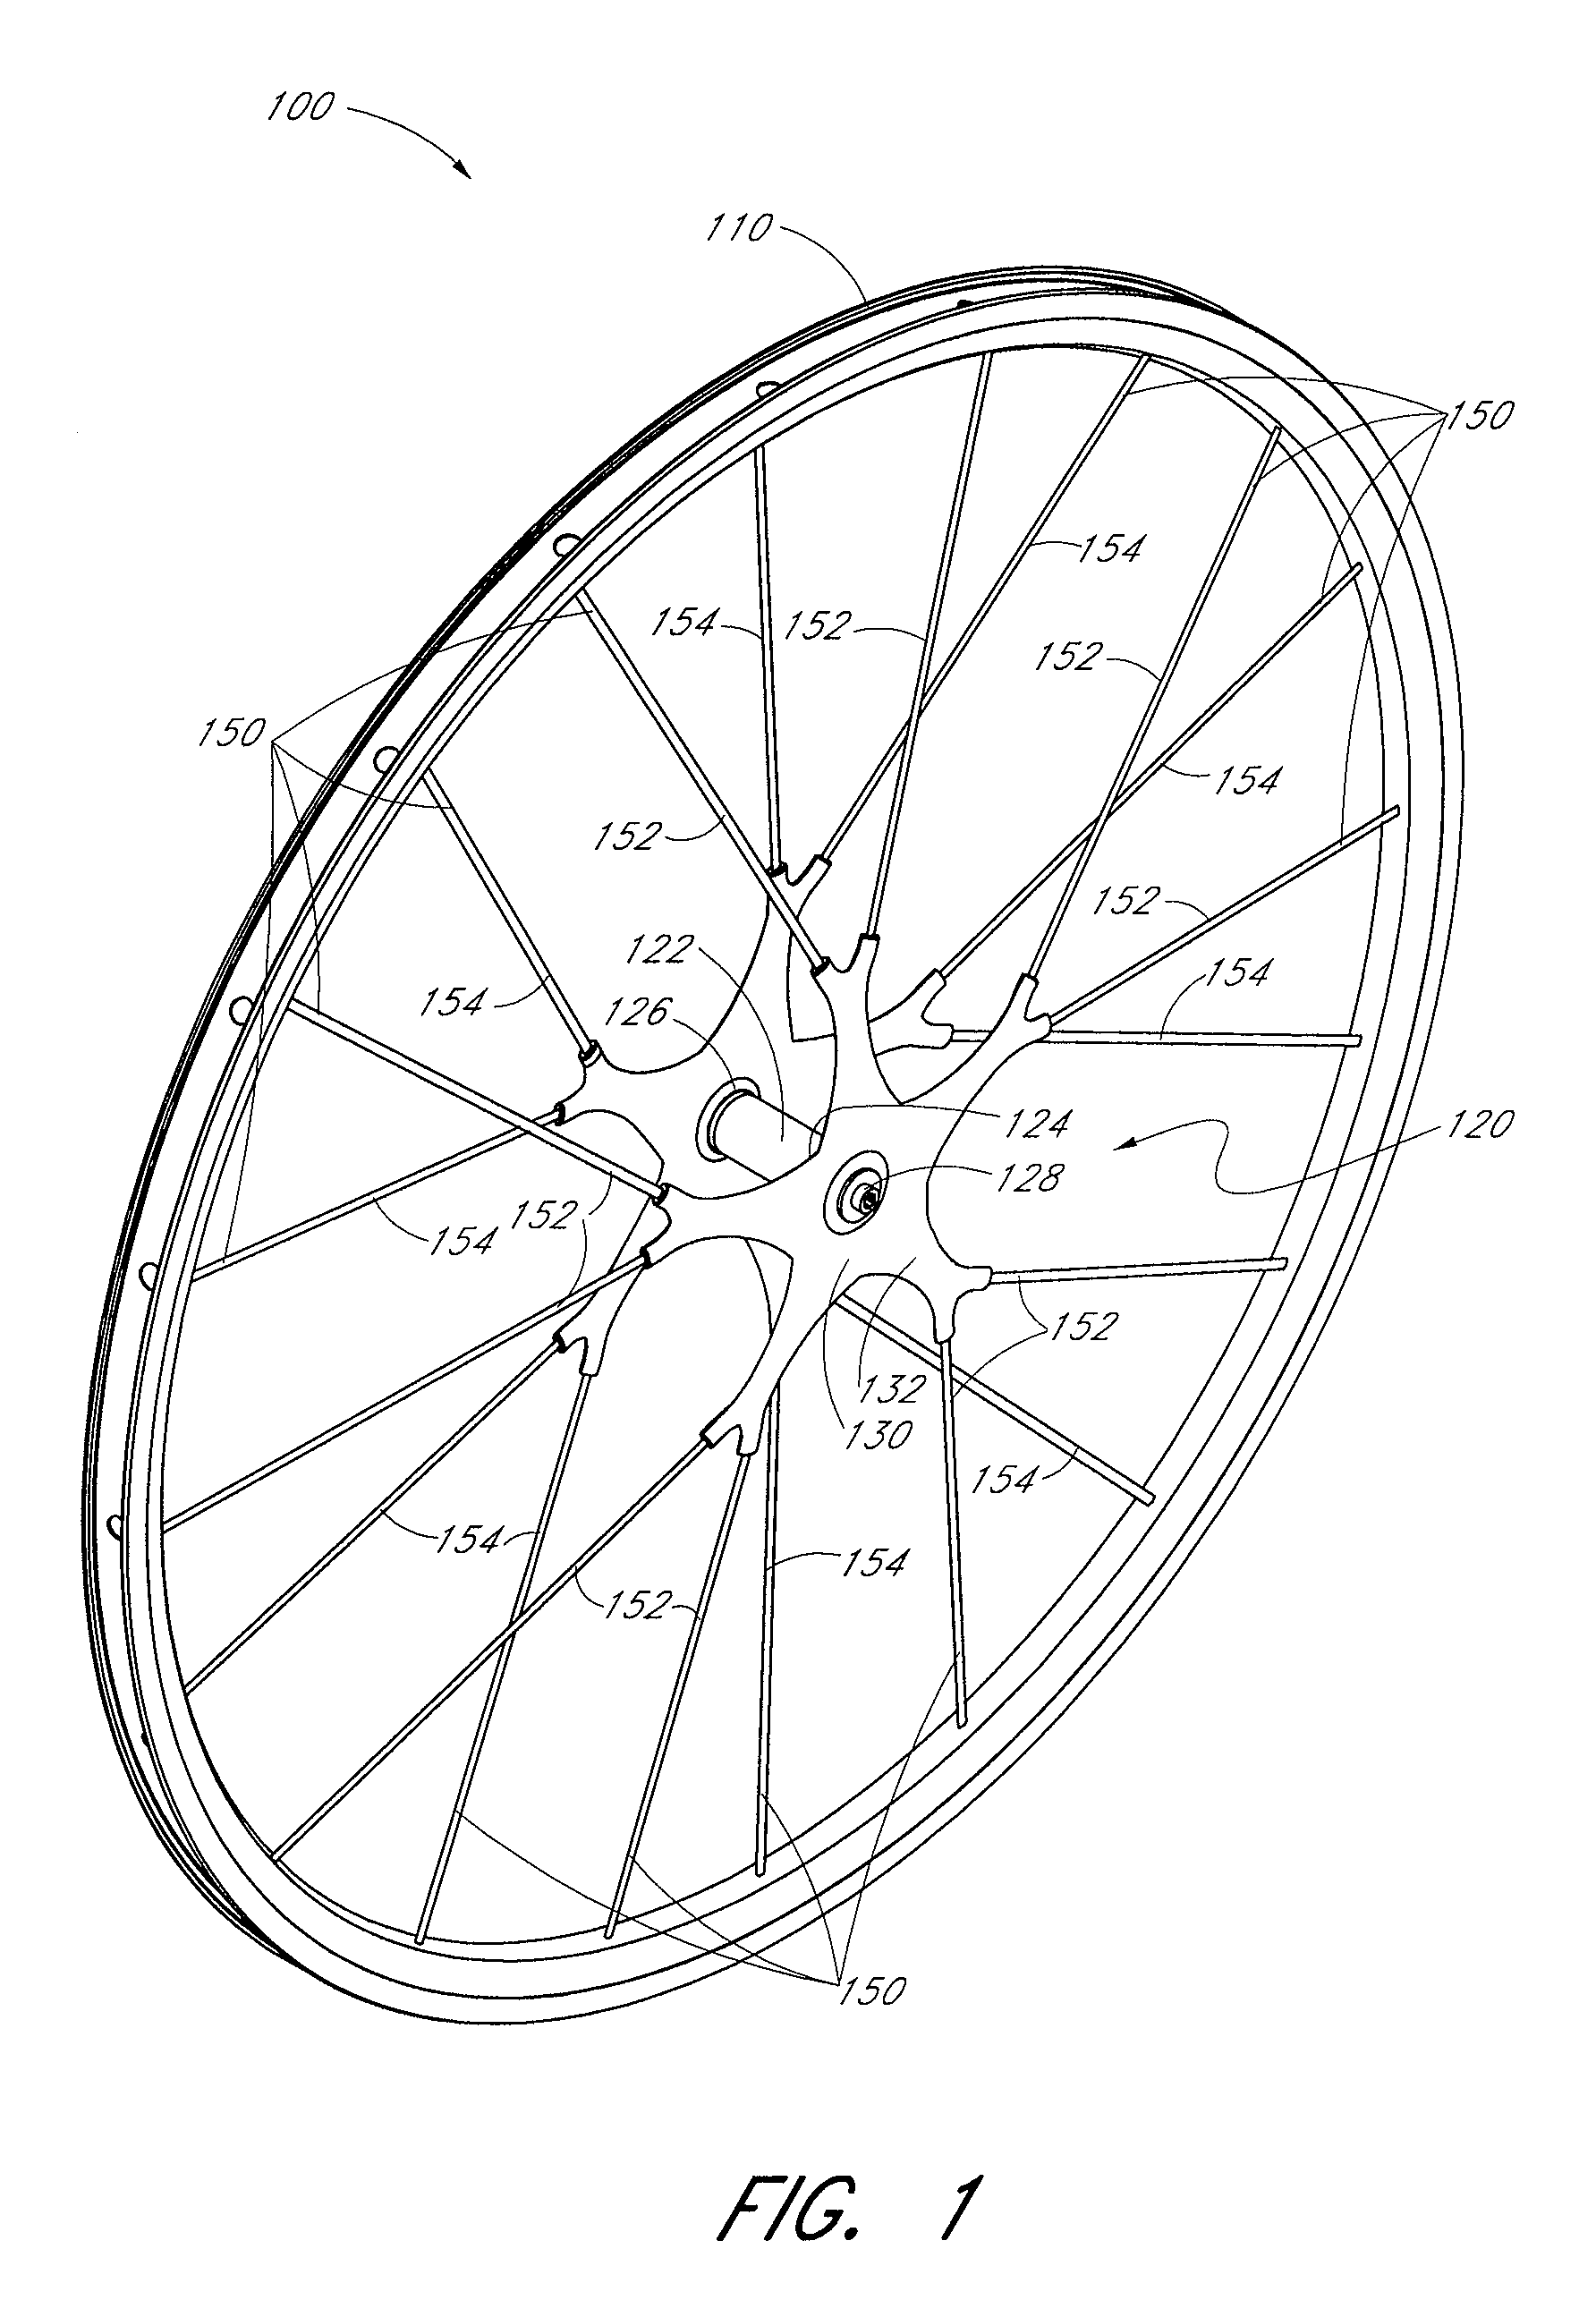 Bicycle wheel and hub